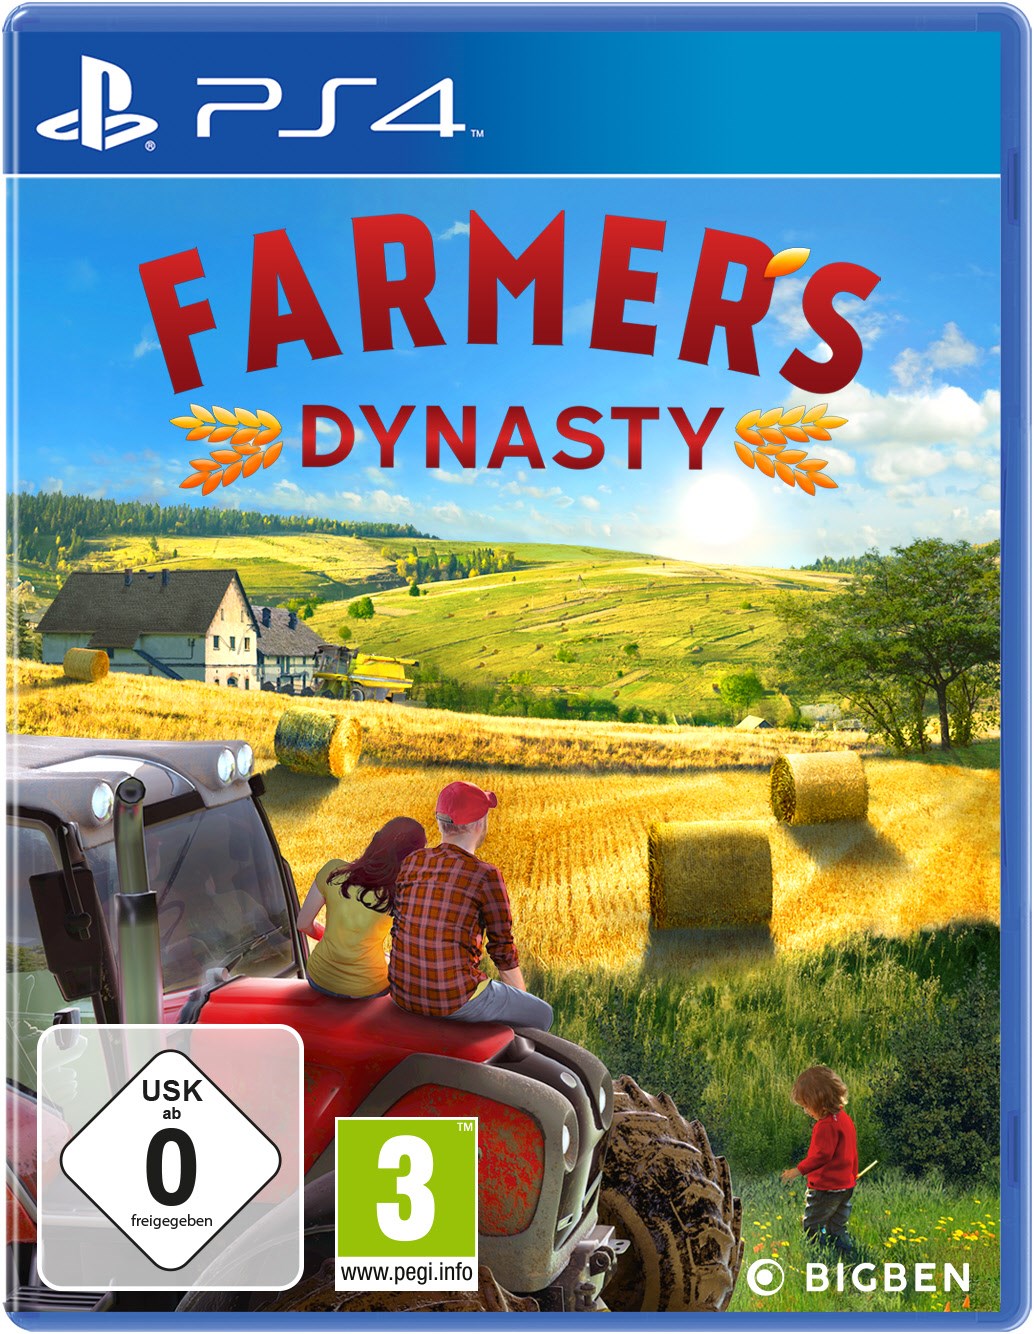 PS4 Farmer Dynasty